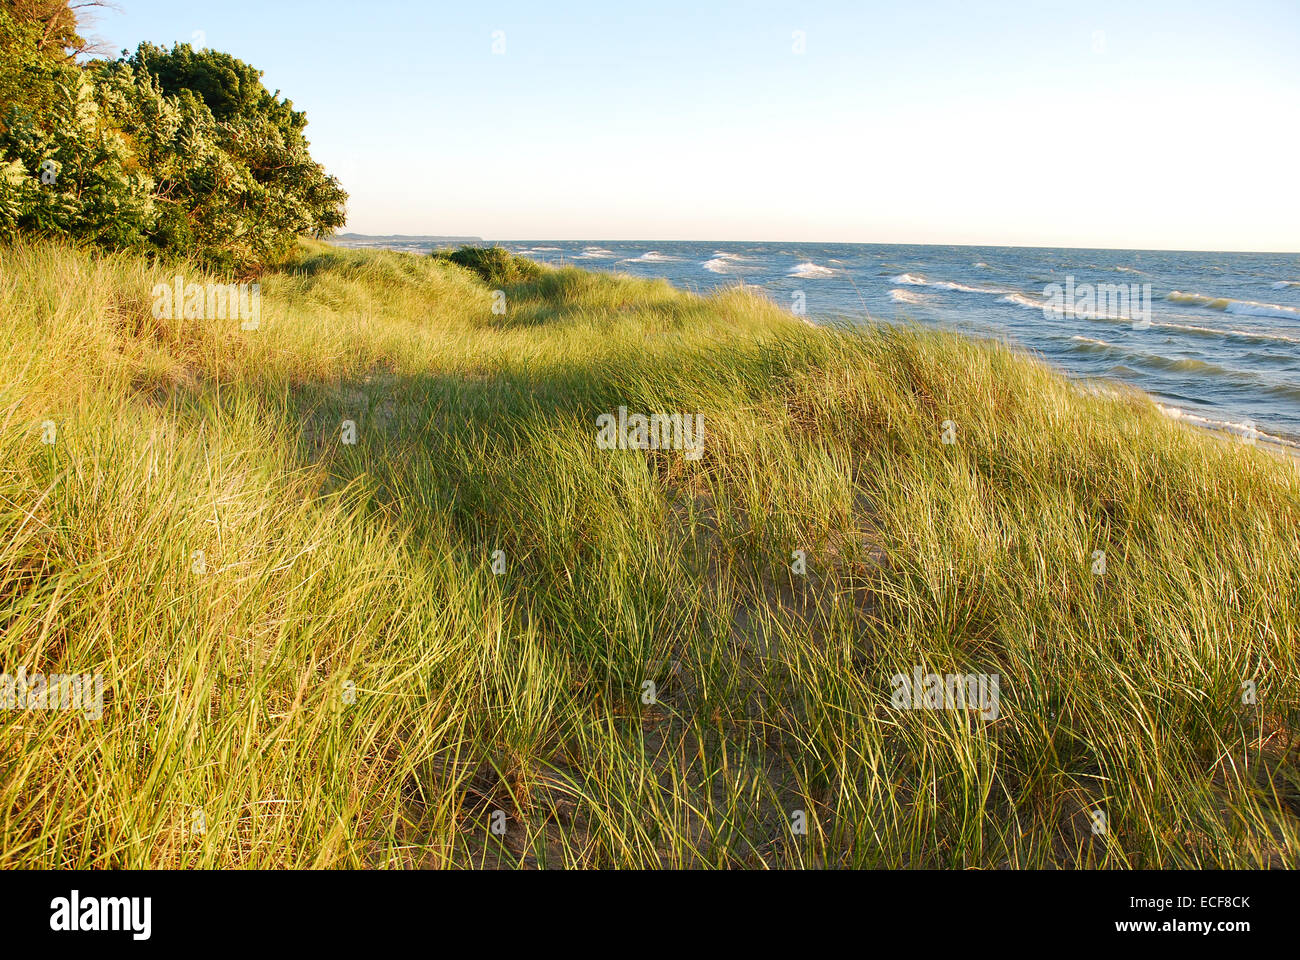 Beach grass on shore of Lake Michigan Stock Photo